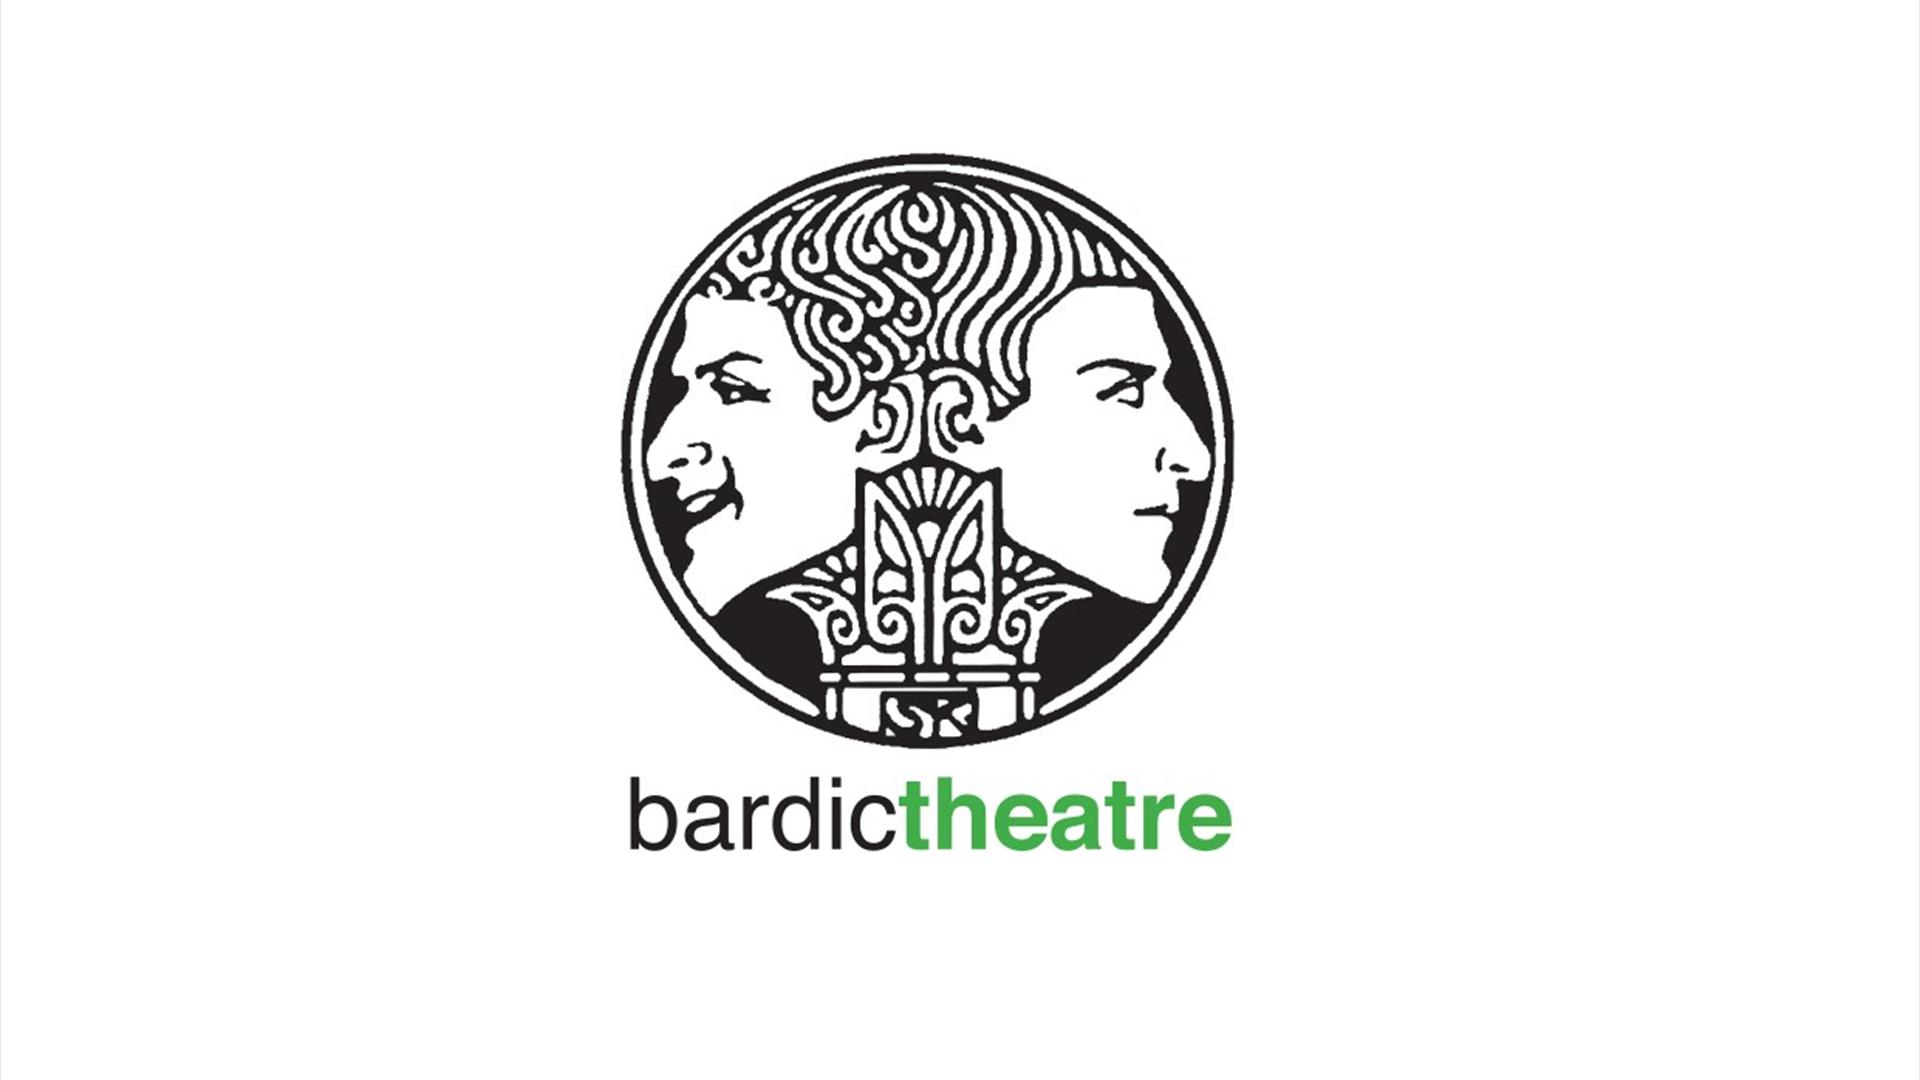 Bardic Theatre logo of the profile of two men